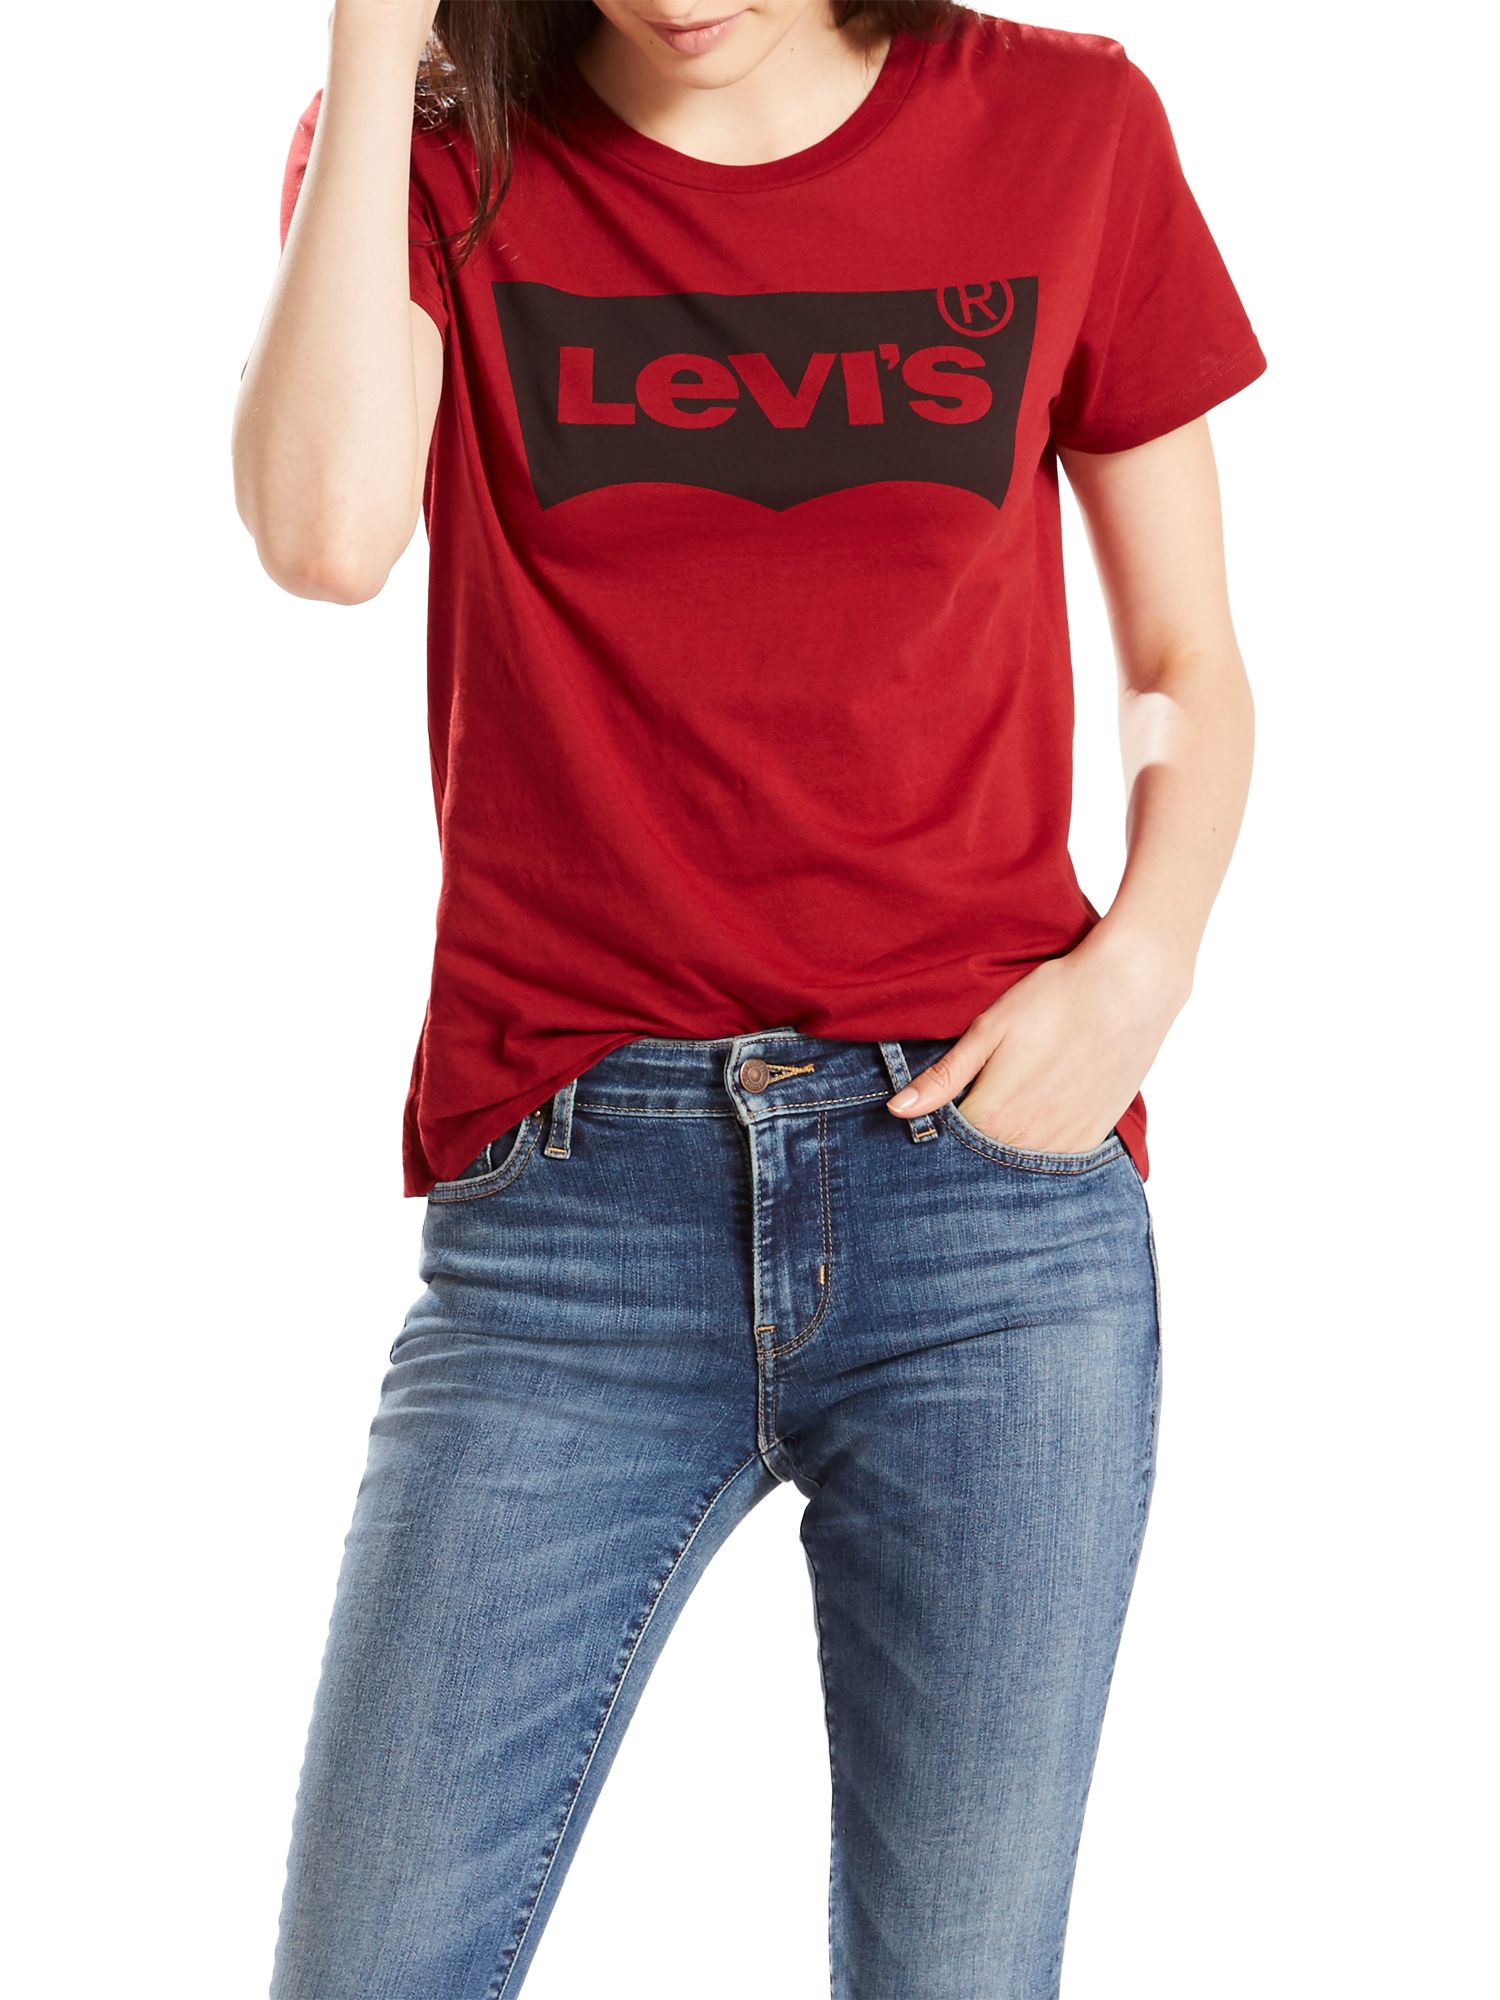 levis shirt red